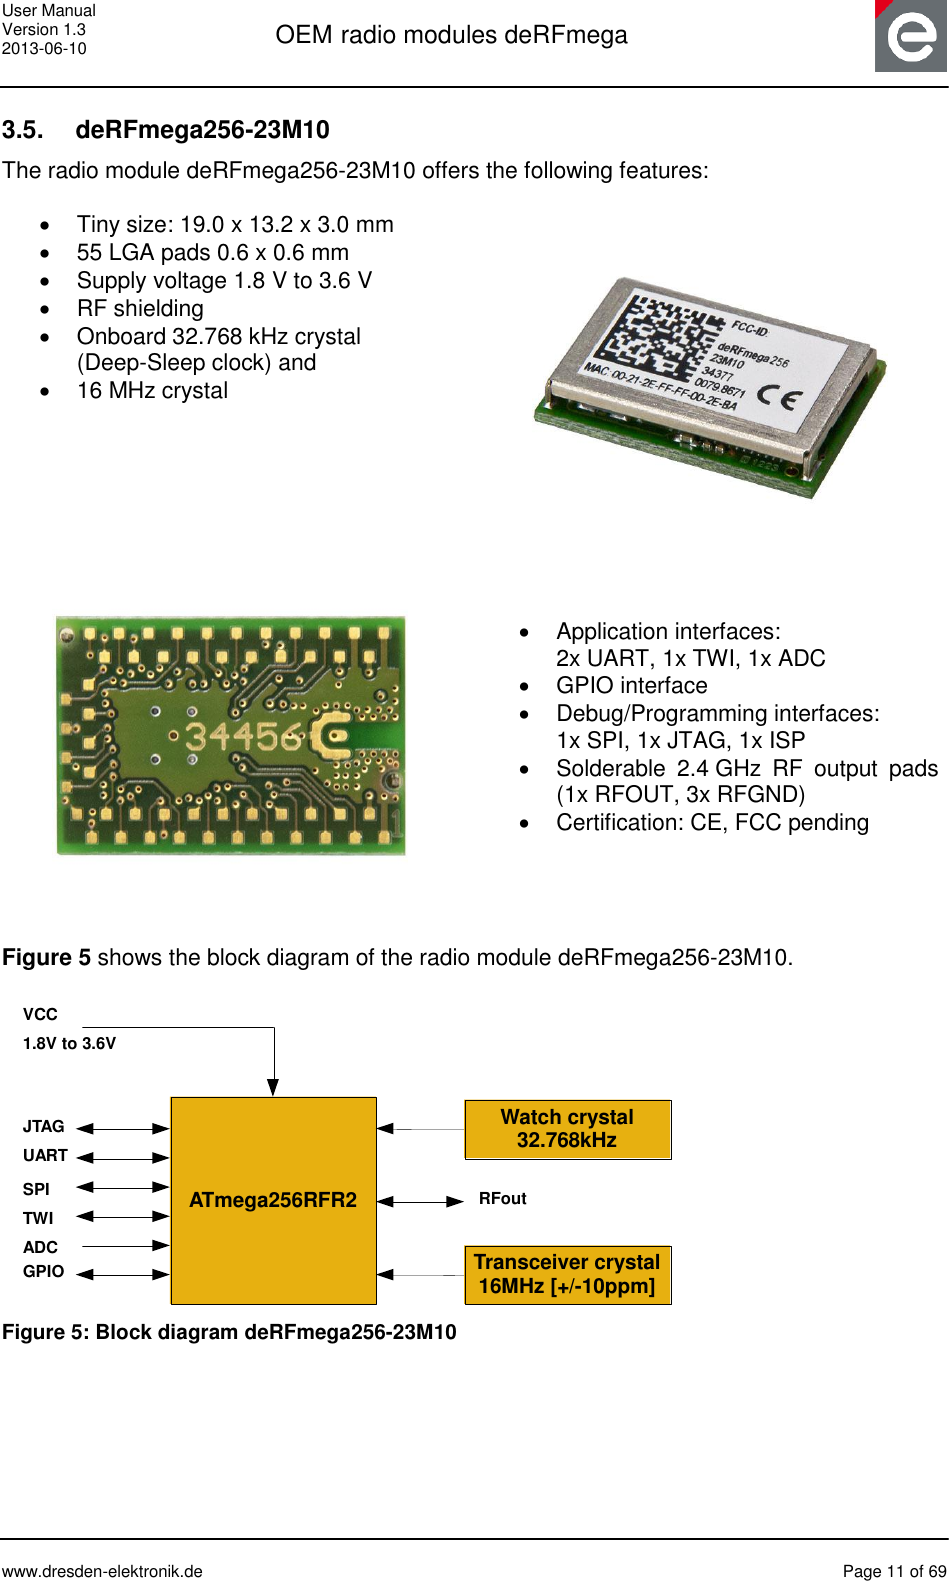 User Manual Version 1.3 2013-06-10  OEM radio modules deRFmega      www.dresden-elektronik.de  Page 11 of 69  3.5.  deRFmega256-23M10 The radio module deRFmega256-23M10 offers the following features:    Tiny size: 19.0 x 13.2 x 3.0 mm  55 LGA pads 0.6 x 0.6 mm   Supply voltage 1.8 V to 3.6 V   RF shielding   Onboard 32.768 kHz crystal  (Deep-Sleep clock) and   16 MHz crystal       Application interfaces:  2x UART, 1x TWI, 1x ADC   GPIO interface   Debug/Programming interfaces:  1x SPI, 1x JTAG, 1x ISP   Solderable  2.4 GHz  RF  output  pads (1x RFOUT, 3x RFGND)  Certification: CE, FCC pending   Figure 5 shows the block diagram of the radio module deRFmega256-23M10.   ATmega256RFR2Transceiver crystal16MHz [+/-10ppm]JTAGUARTVCC1.8V to 3.6VWatch crystal32.768kHzSPITWIADCGPIORFout Figure 5: Block diagram deRFmega256-23M10 